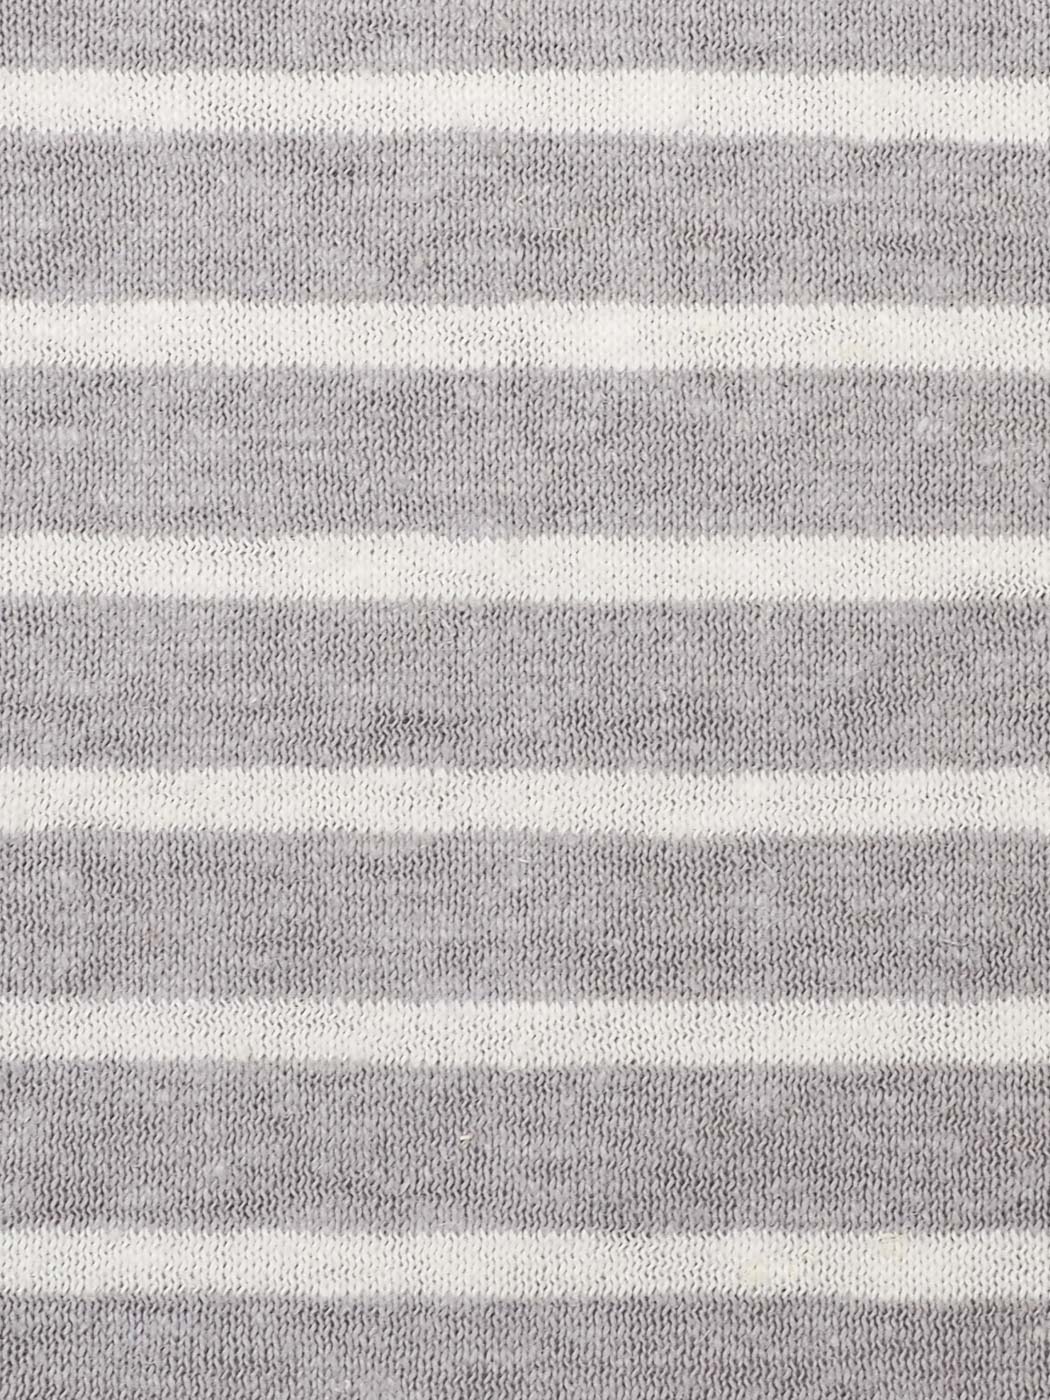 STRIPE JERSEY HEMP BLEND | Grey/White Stripe